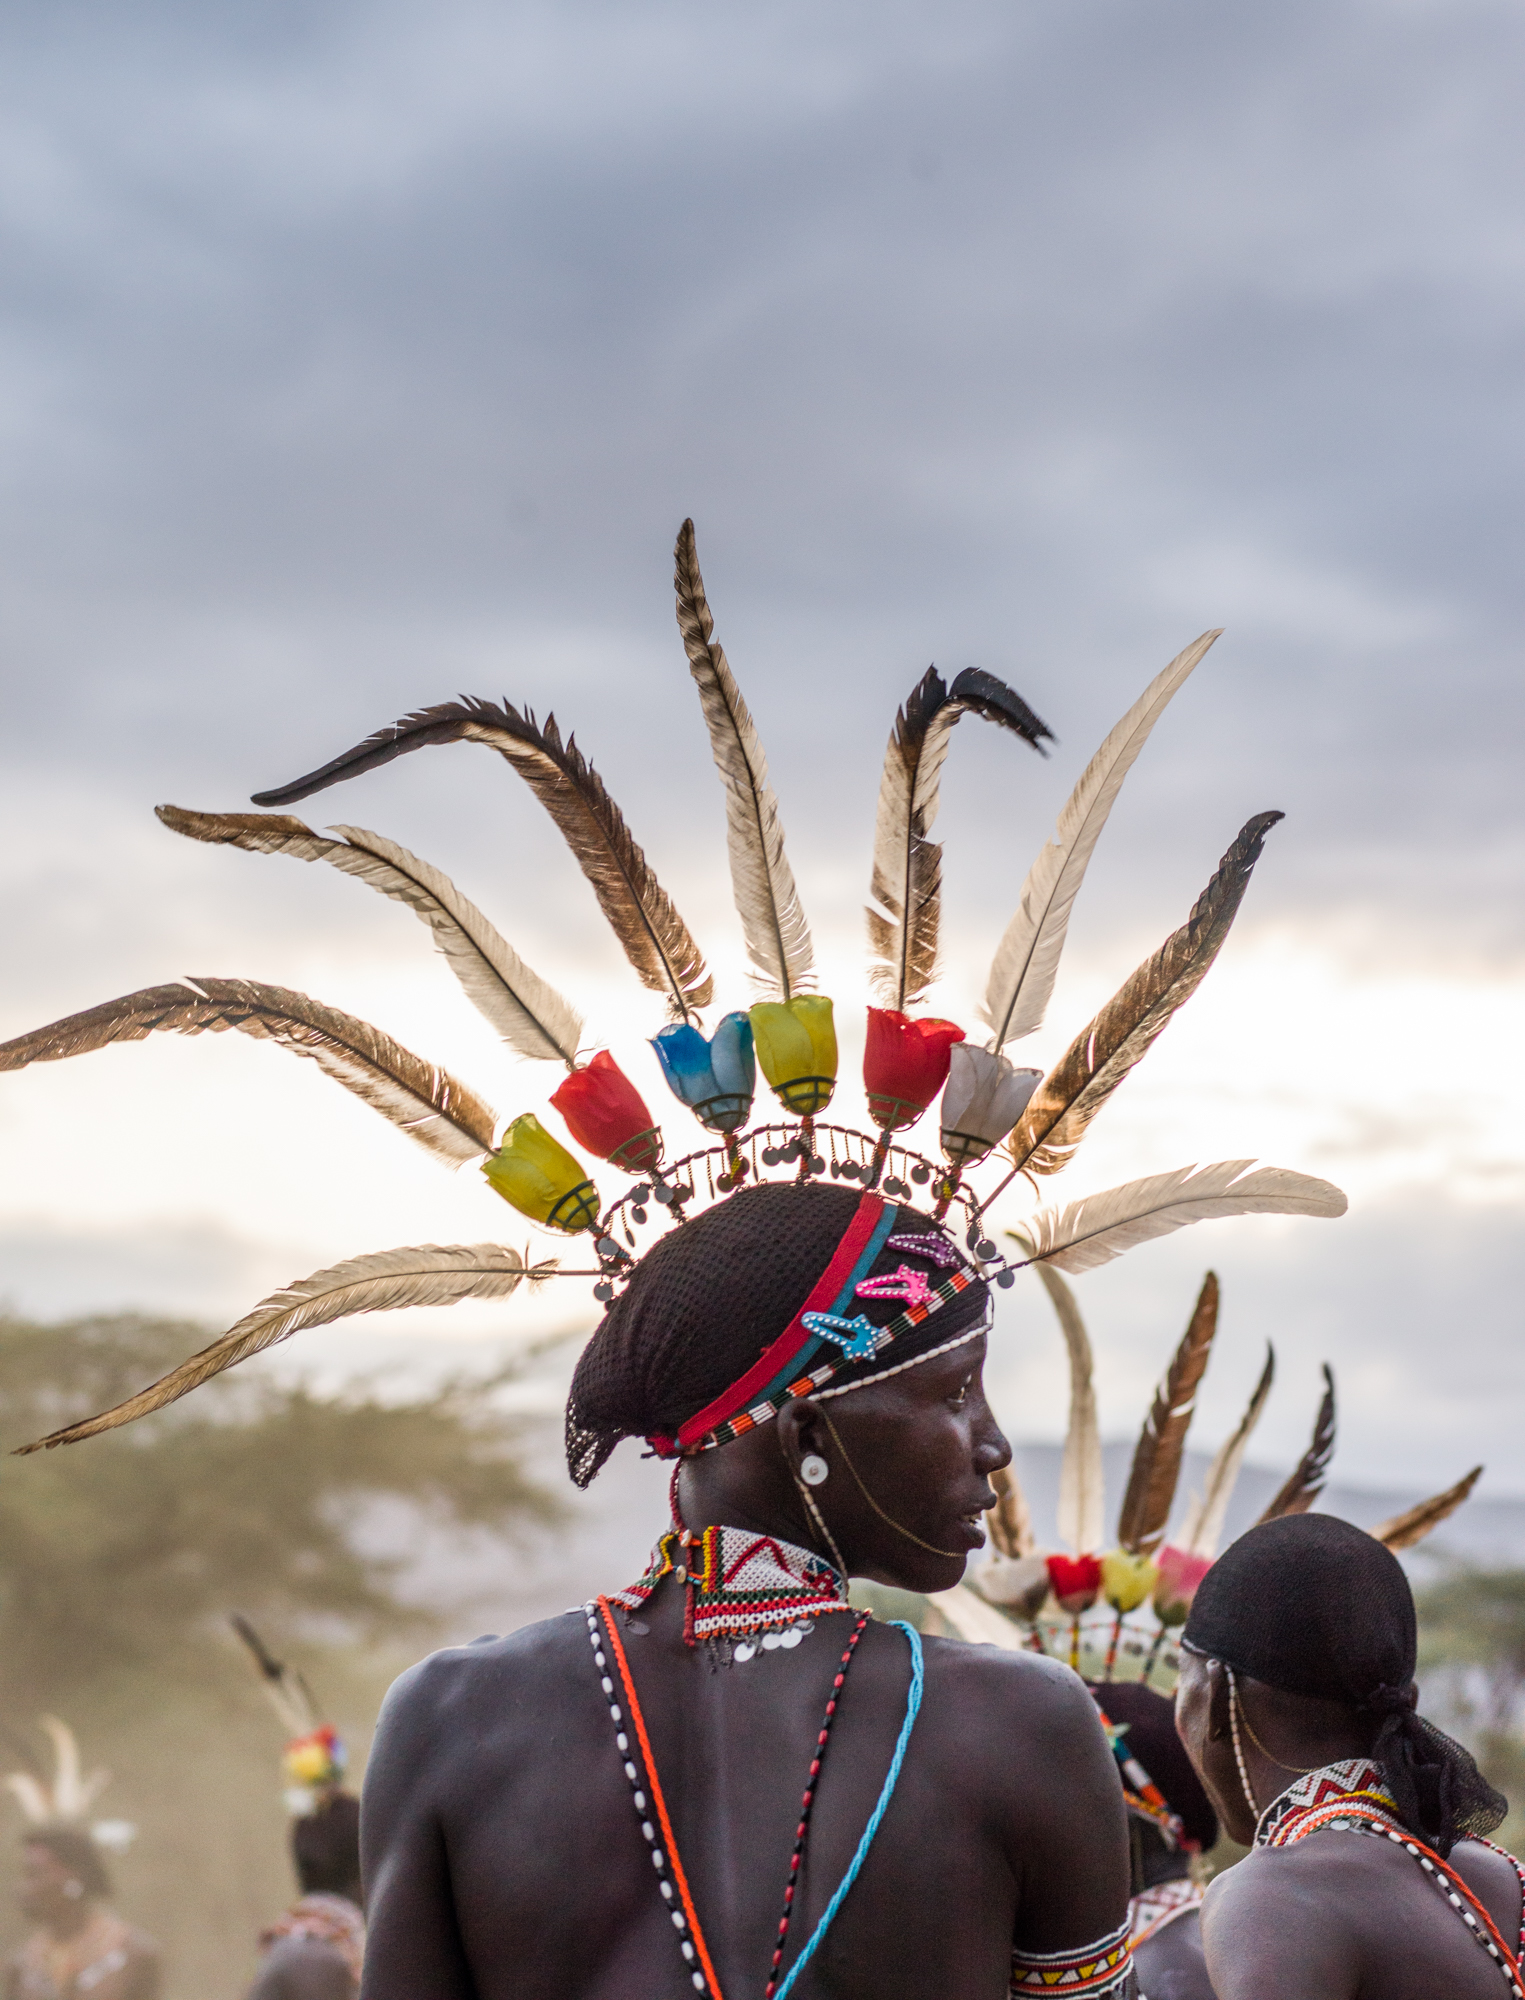   Samburu warrior, Samburu, Kenya  - Ceremonial dancing is a significant part of the Samburu culture.  The Samburu tribes mainly live on protected reserves in remote areas of Northern Kenya.   They are semi-nomadic, depending on their herds of cattle